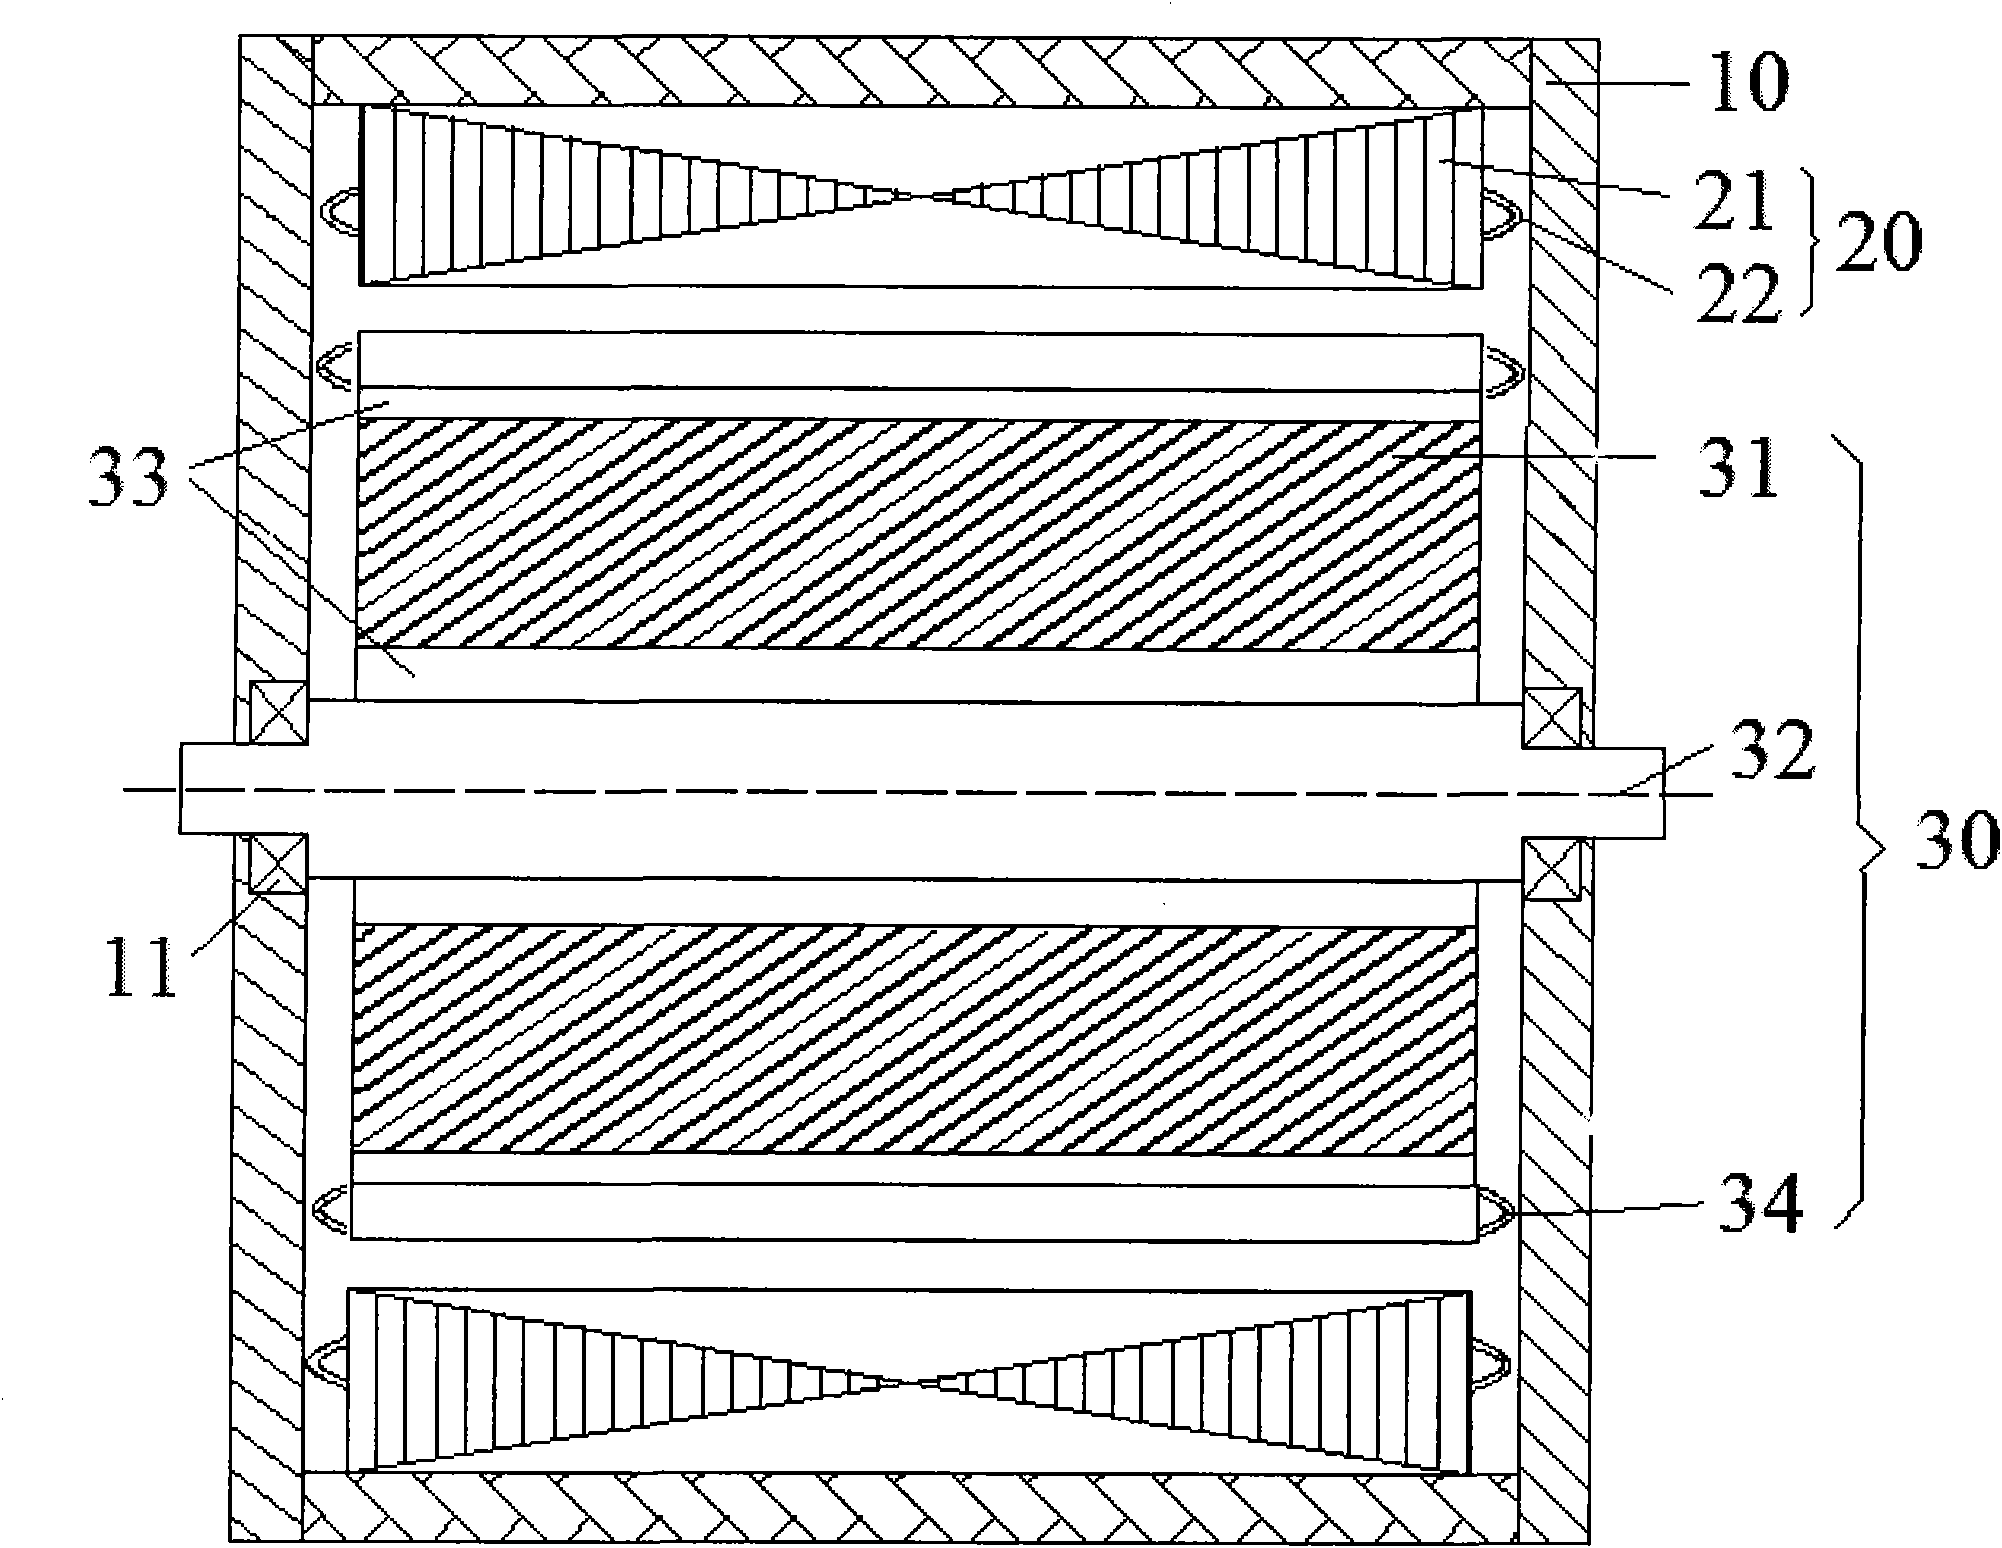 Hybrid excitation permanent magnet motor with secondary harmonic excitation